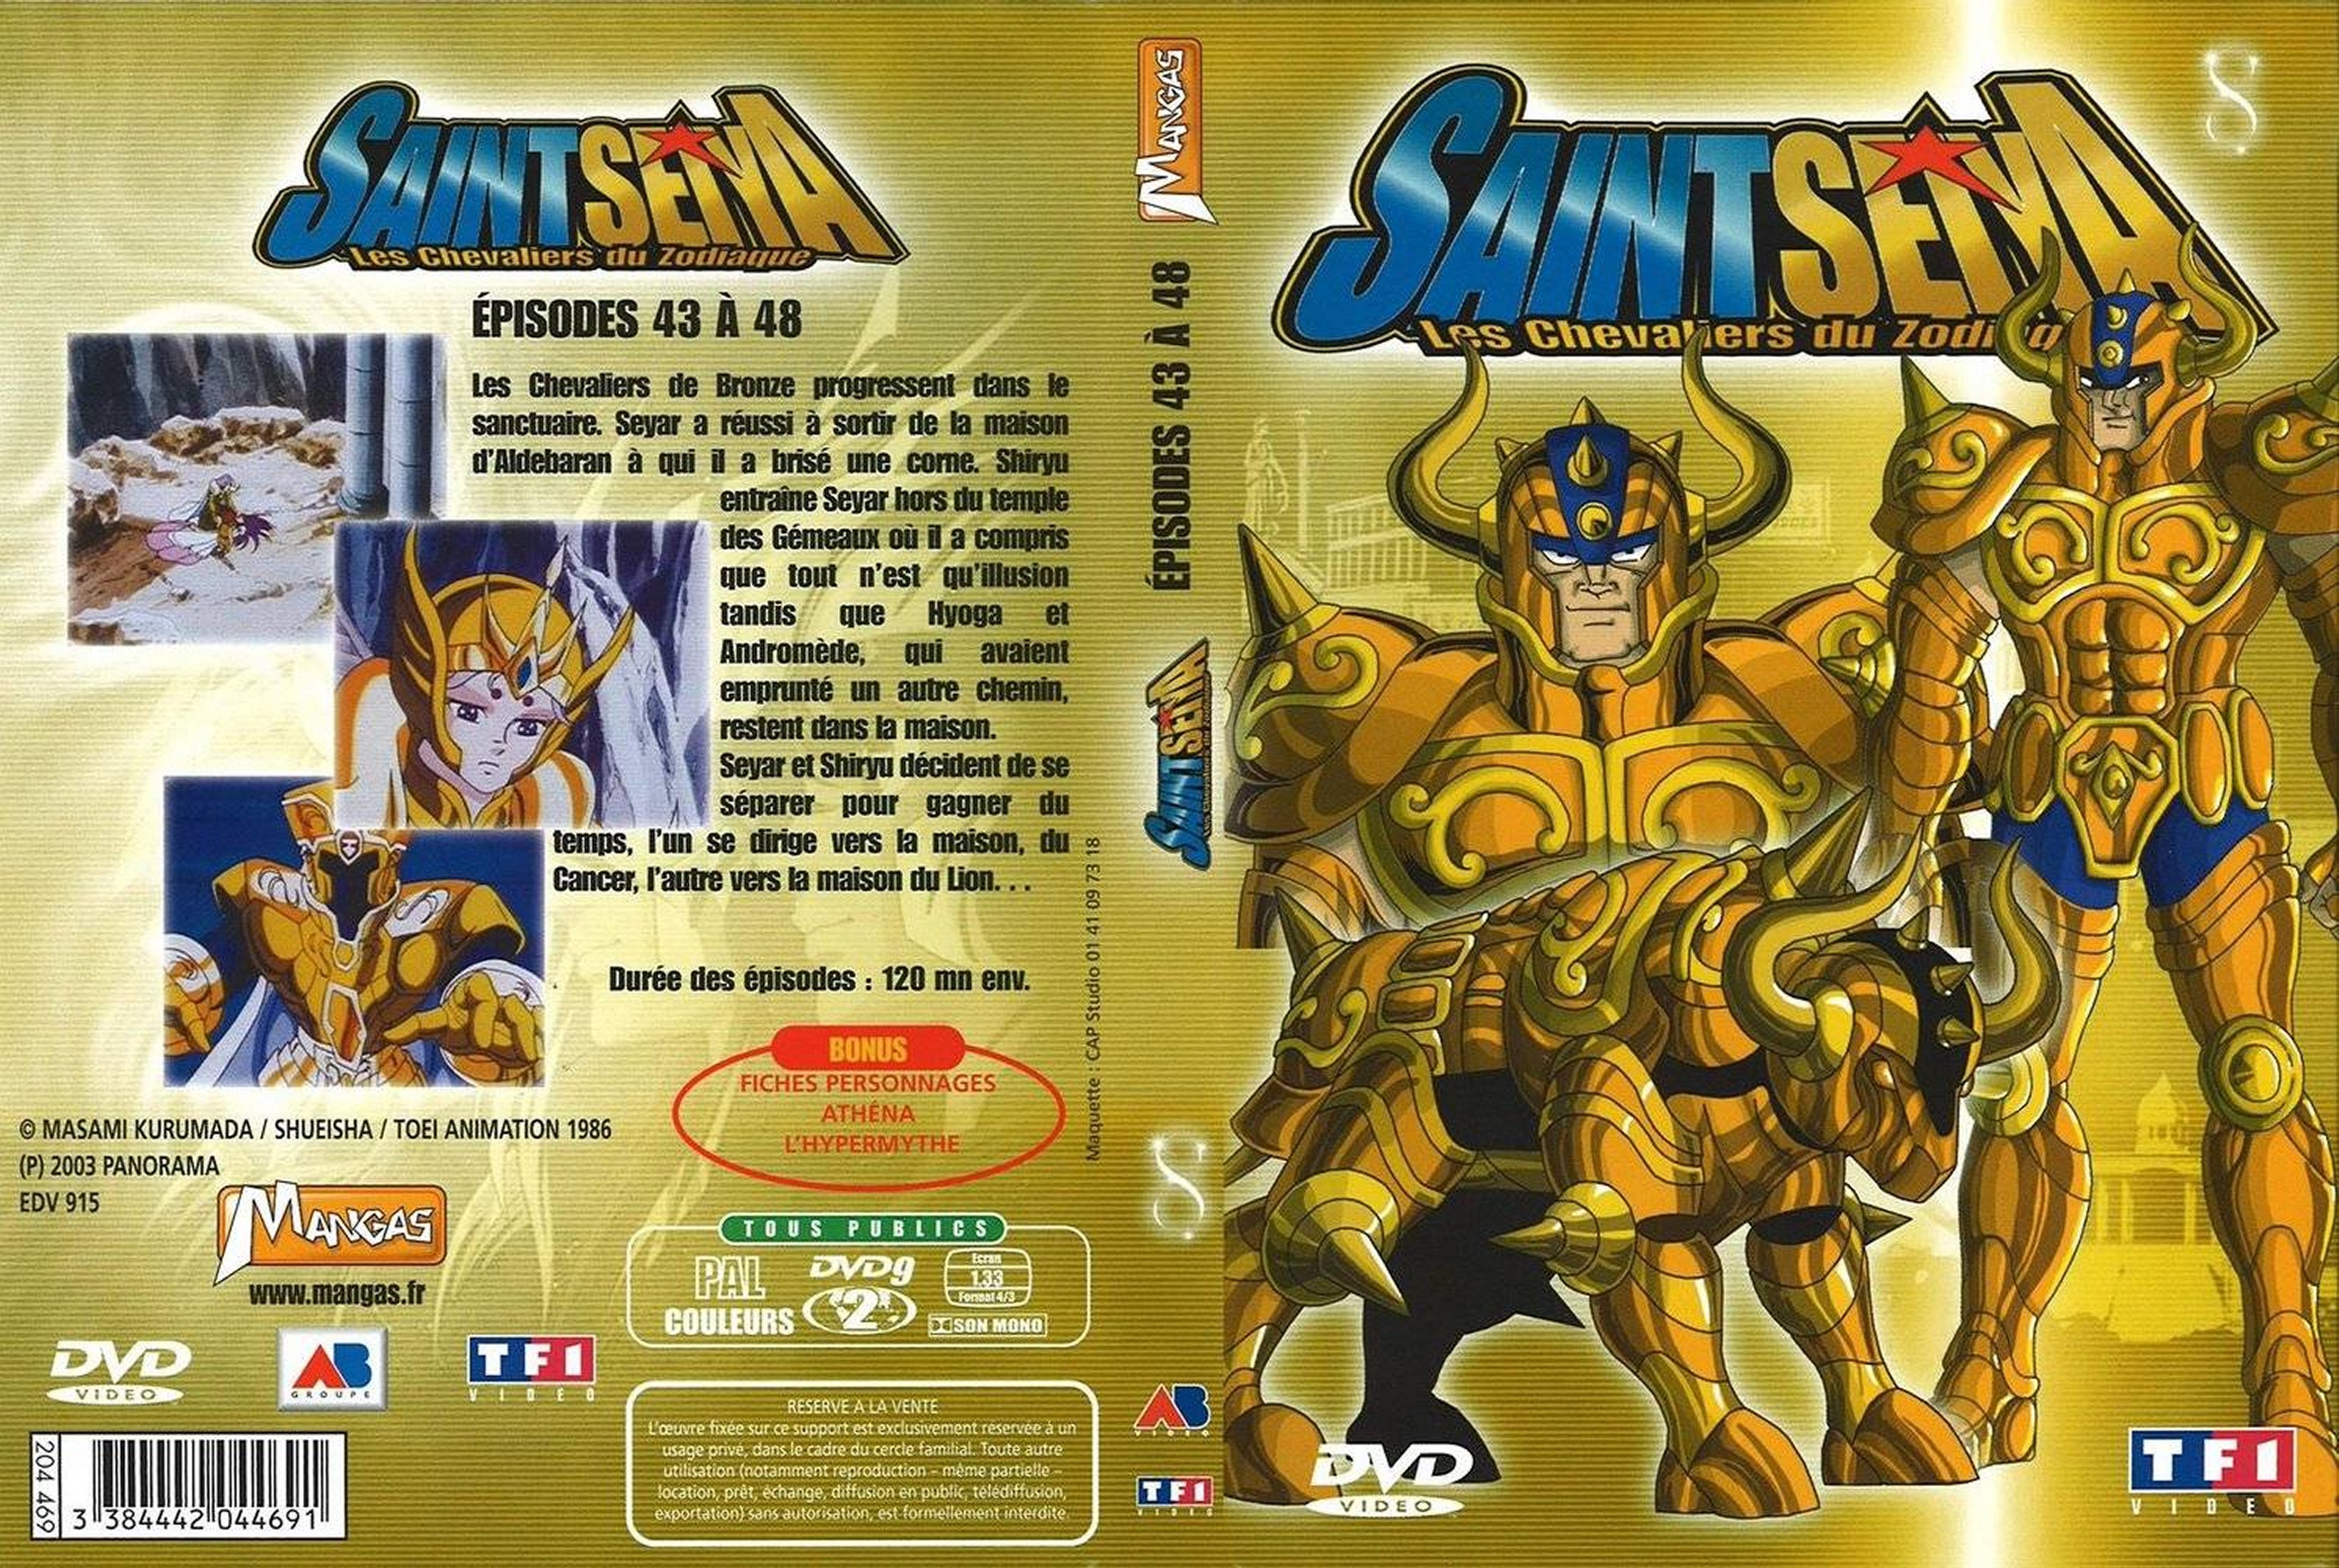 Jaquette DVD Saint Seiya vol 08